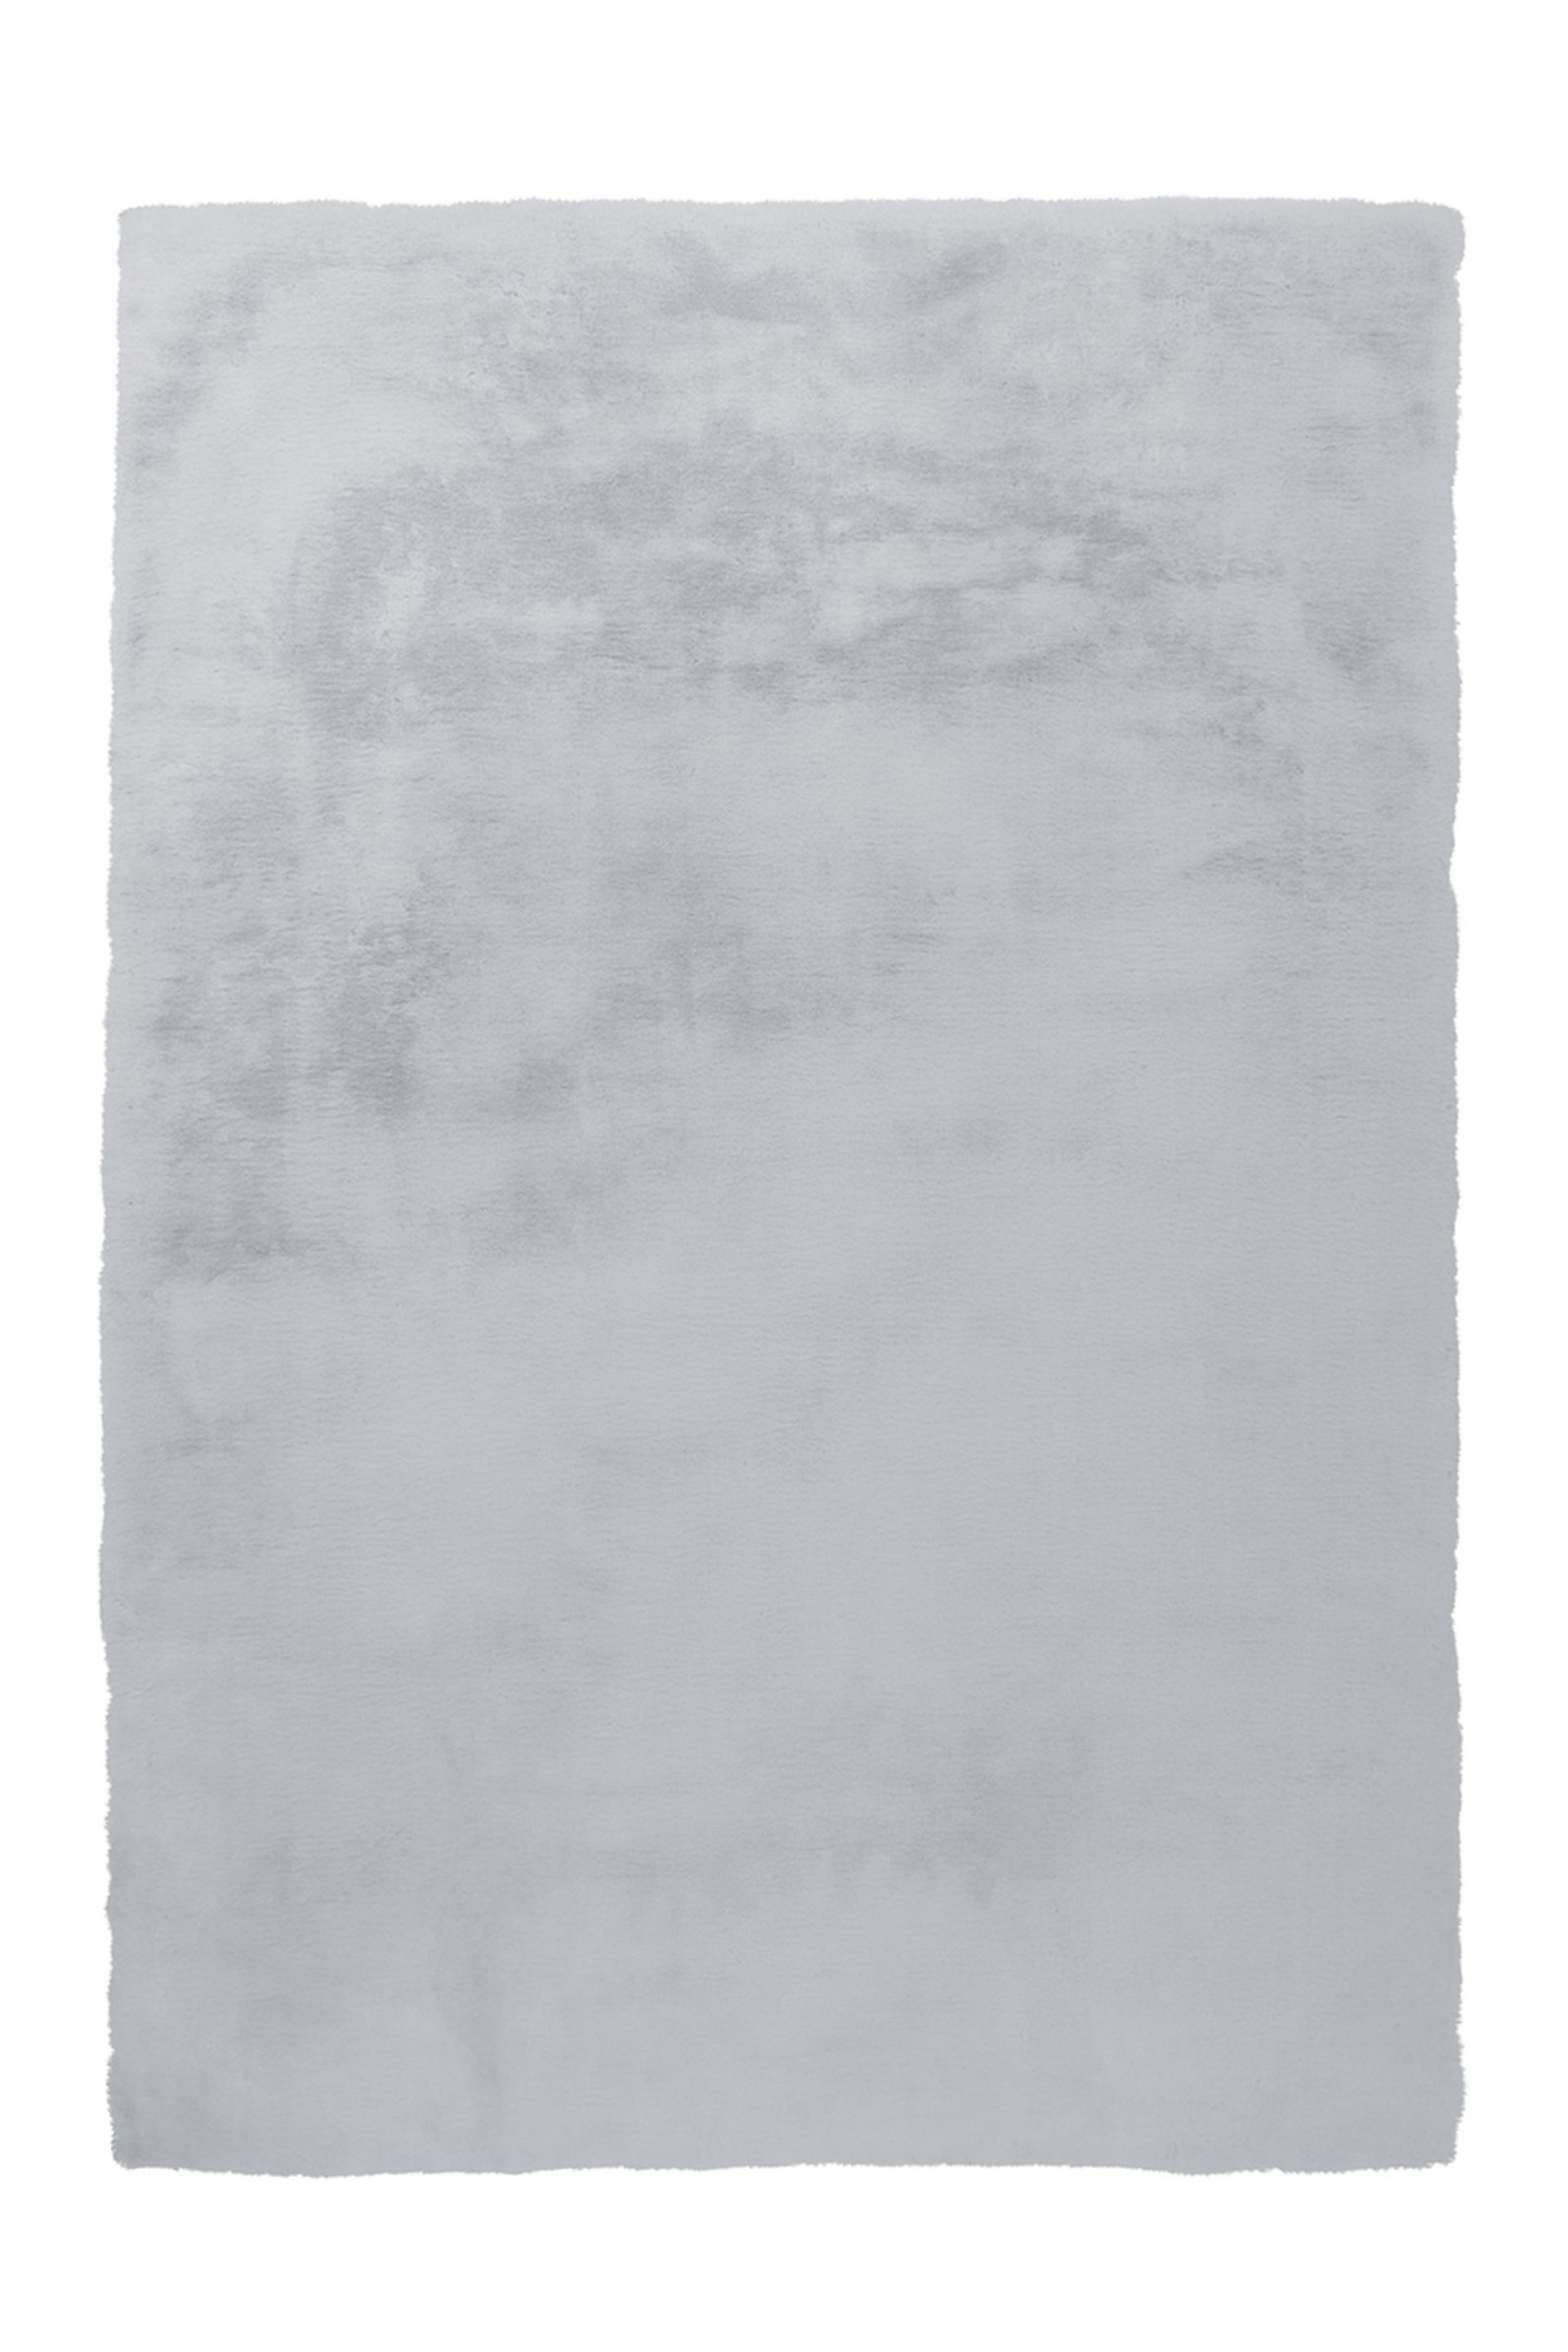 Teppich Rabbit 100 Grau / Blau  80 cm x 150 cm